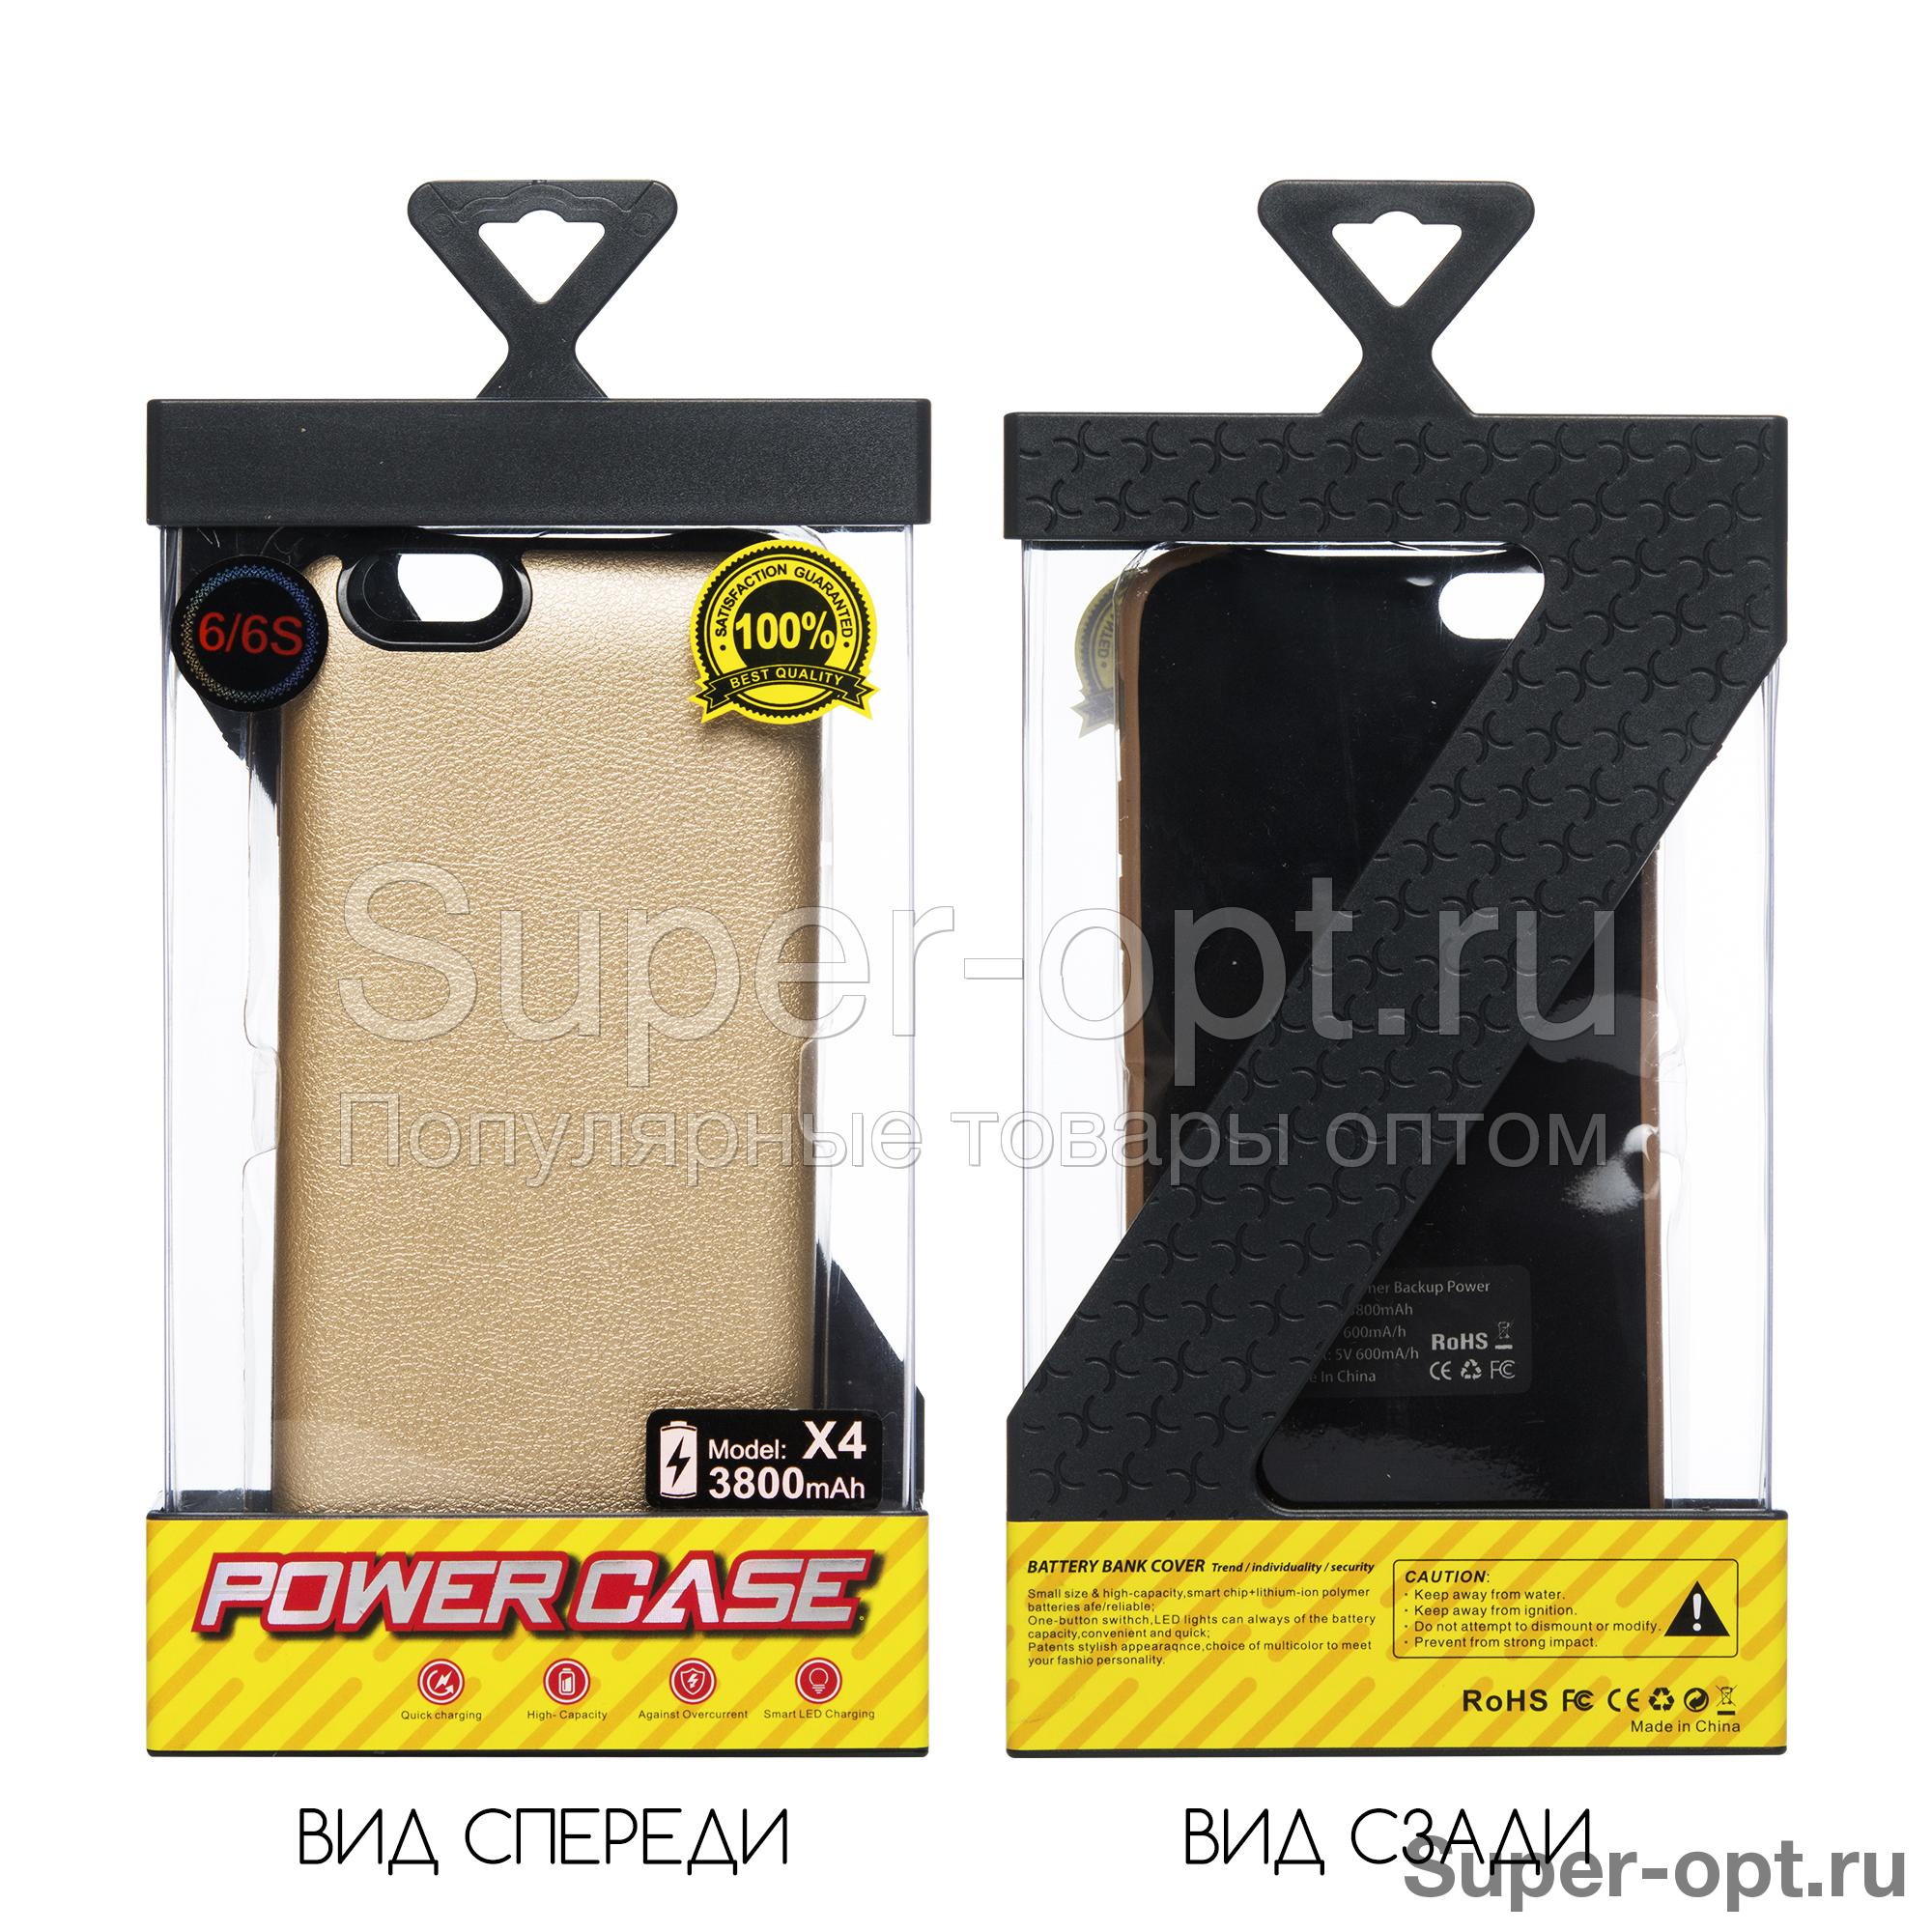 Чехол-аккумулятор Power Case X4 3800 mAh для iPhone 6/6s